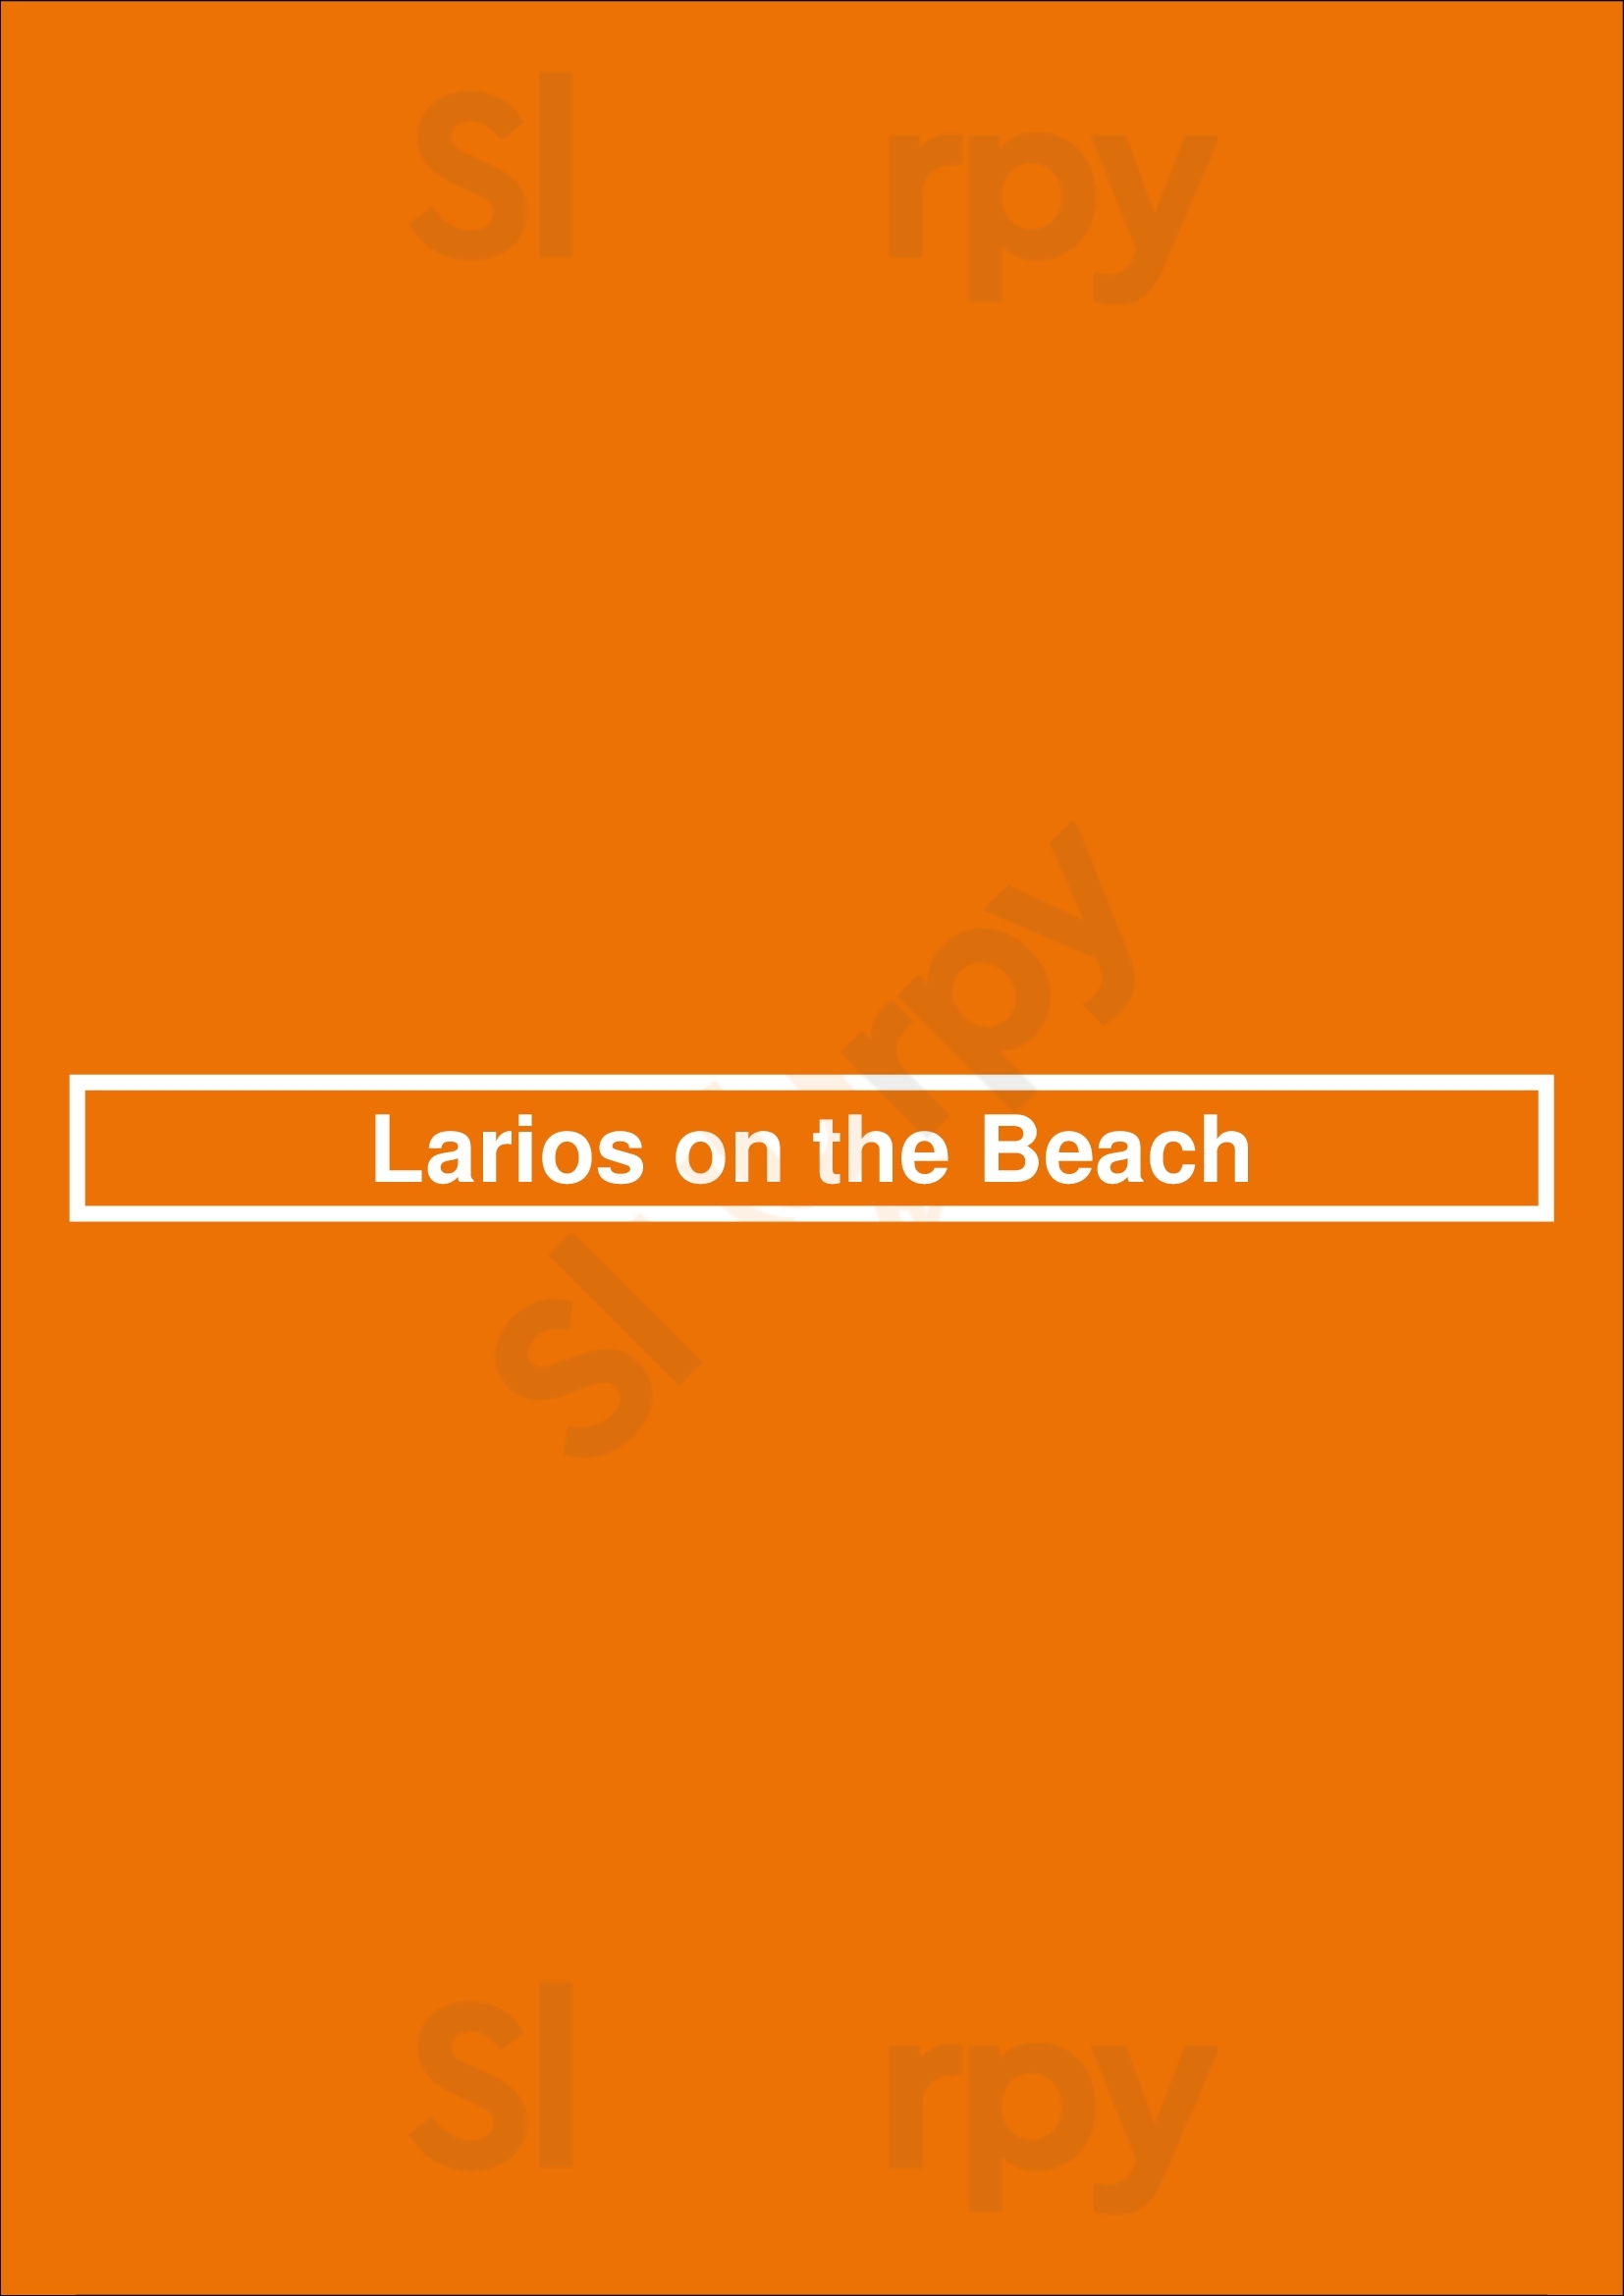 Larios On The Beach Miami Beach Menu - 1